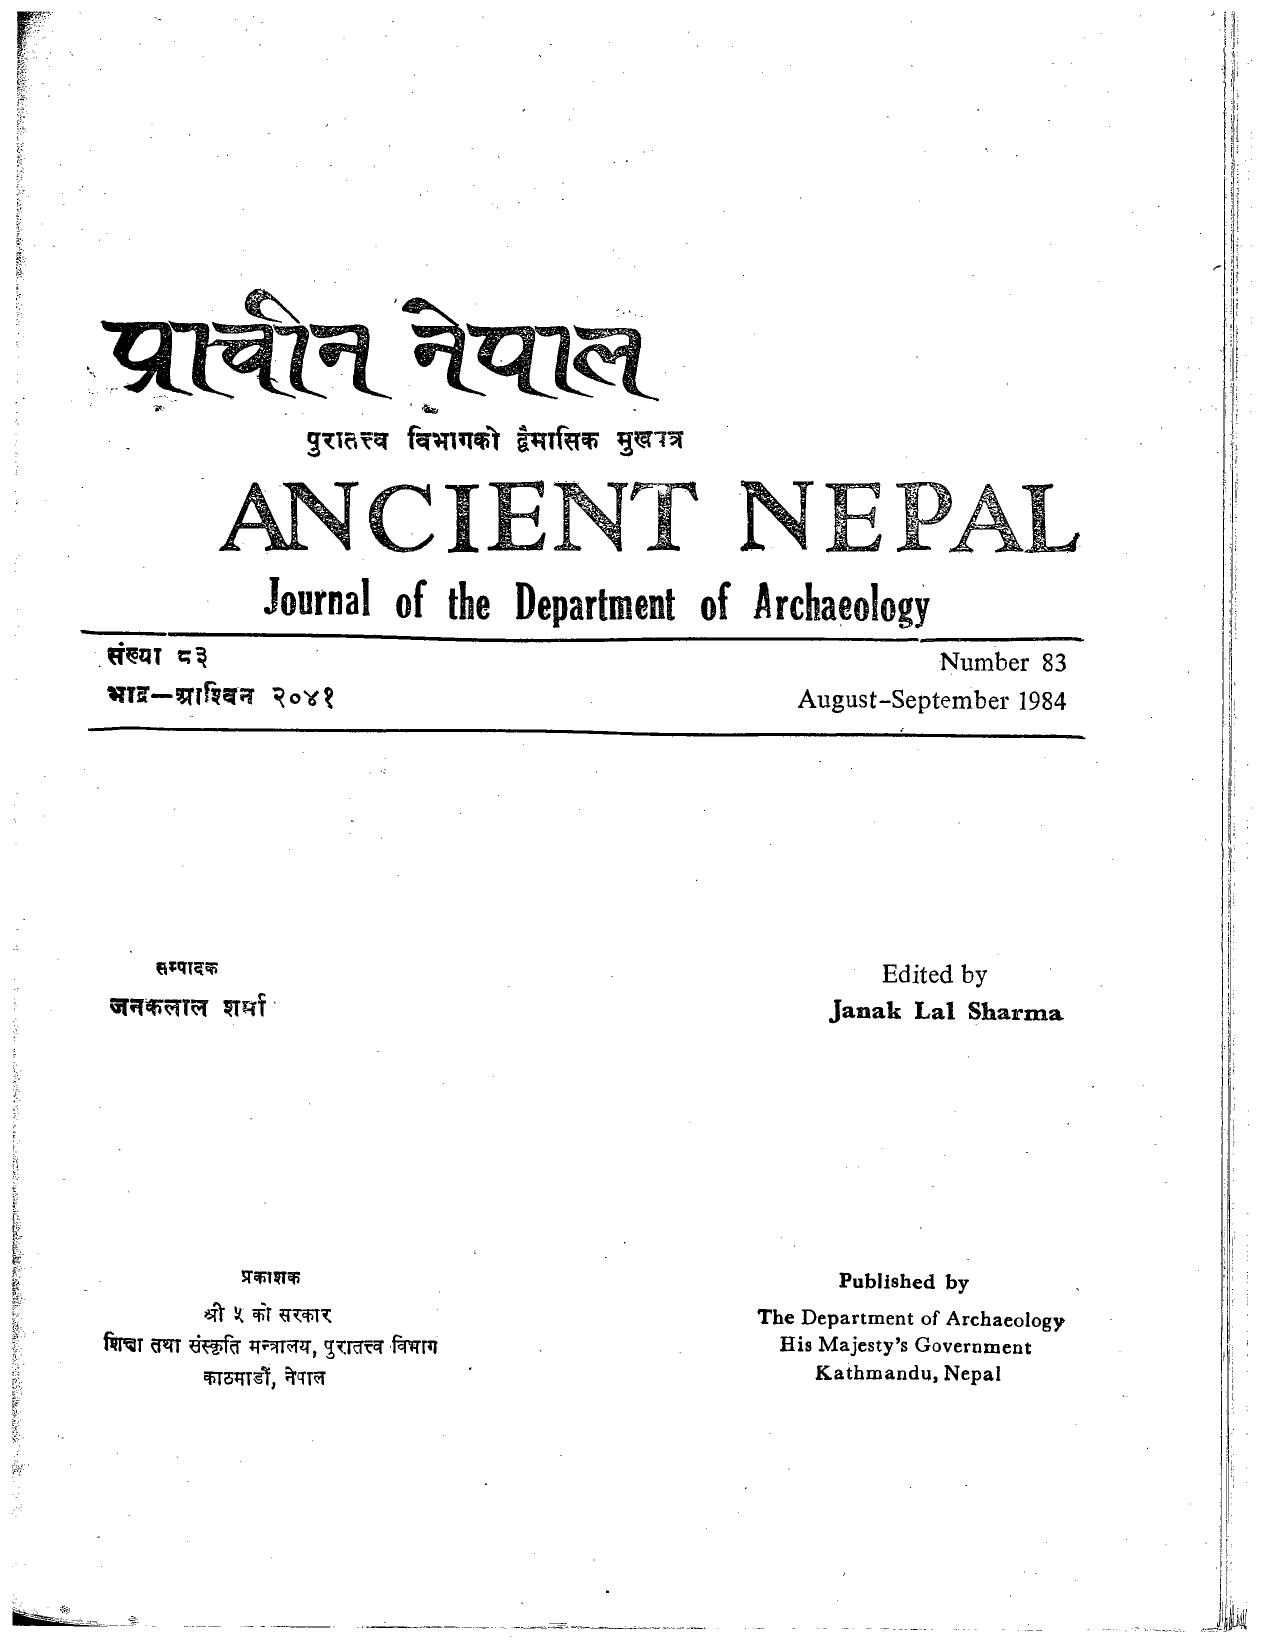 Ancient Nepal 83